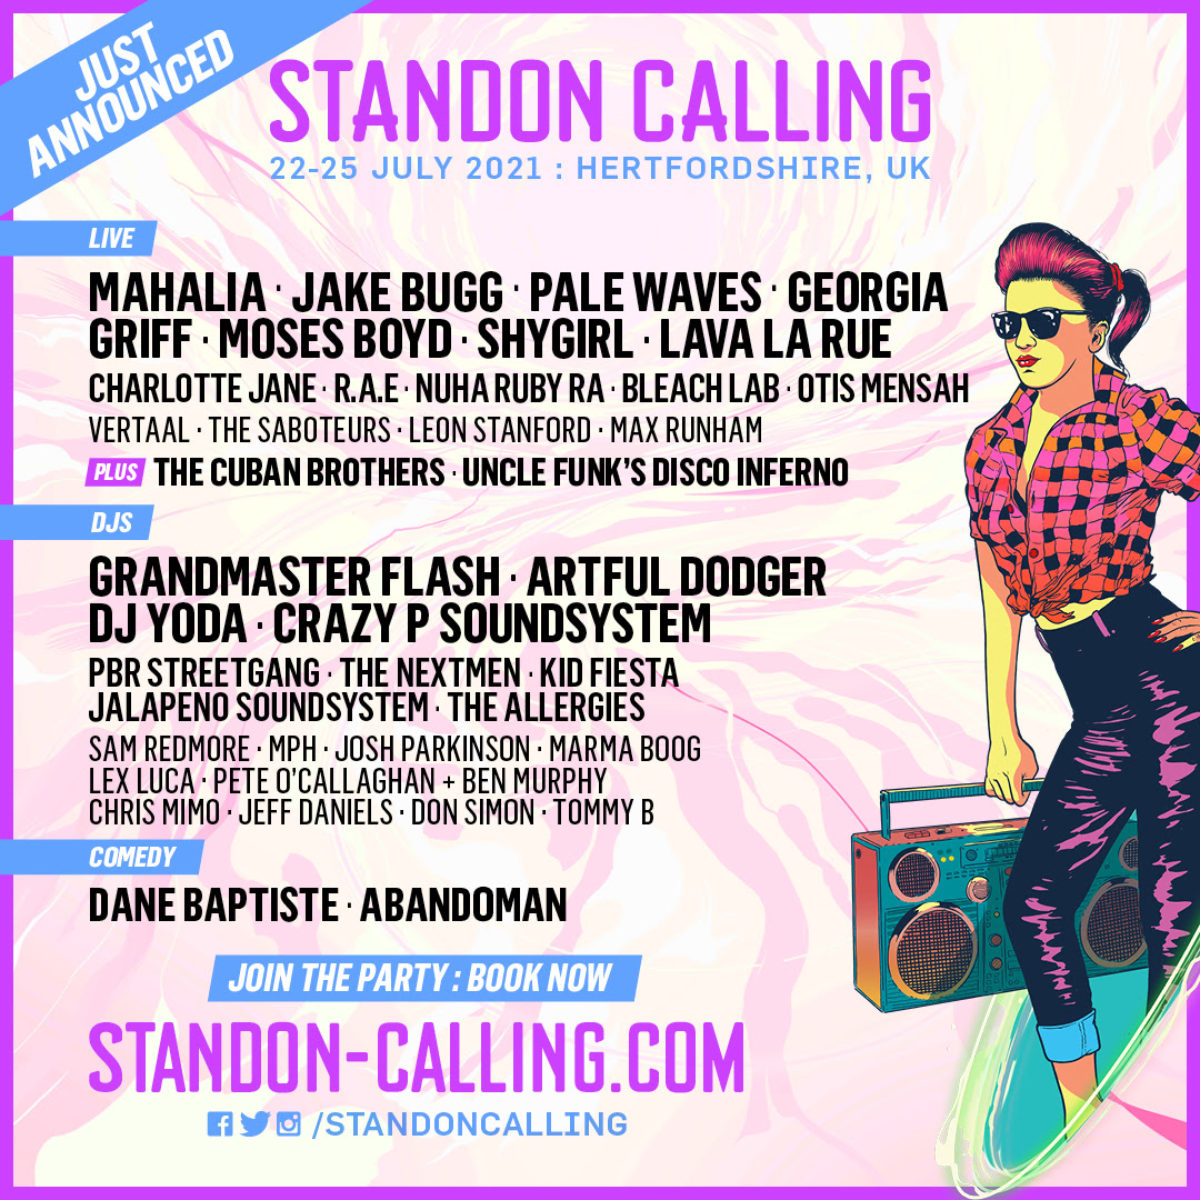 2023 Theme - Standon Calling